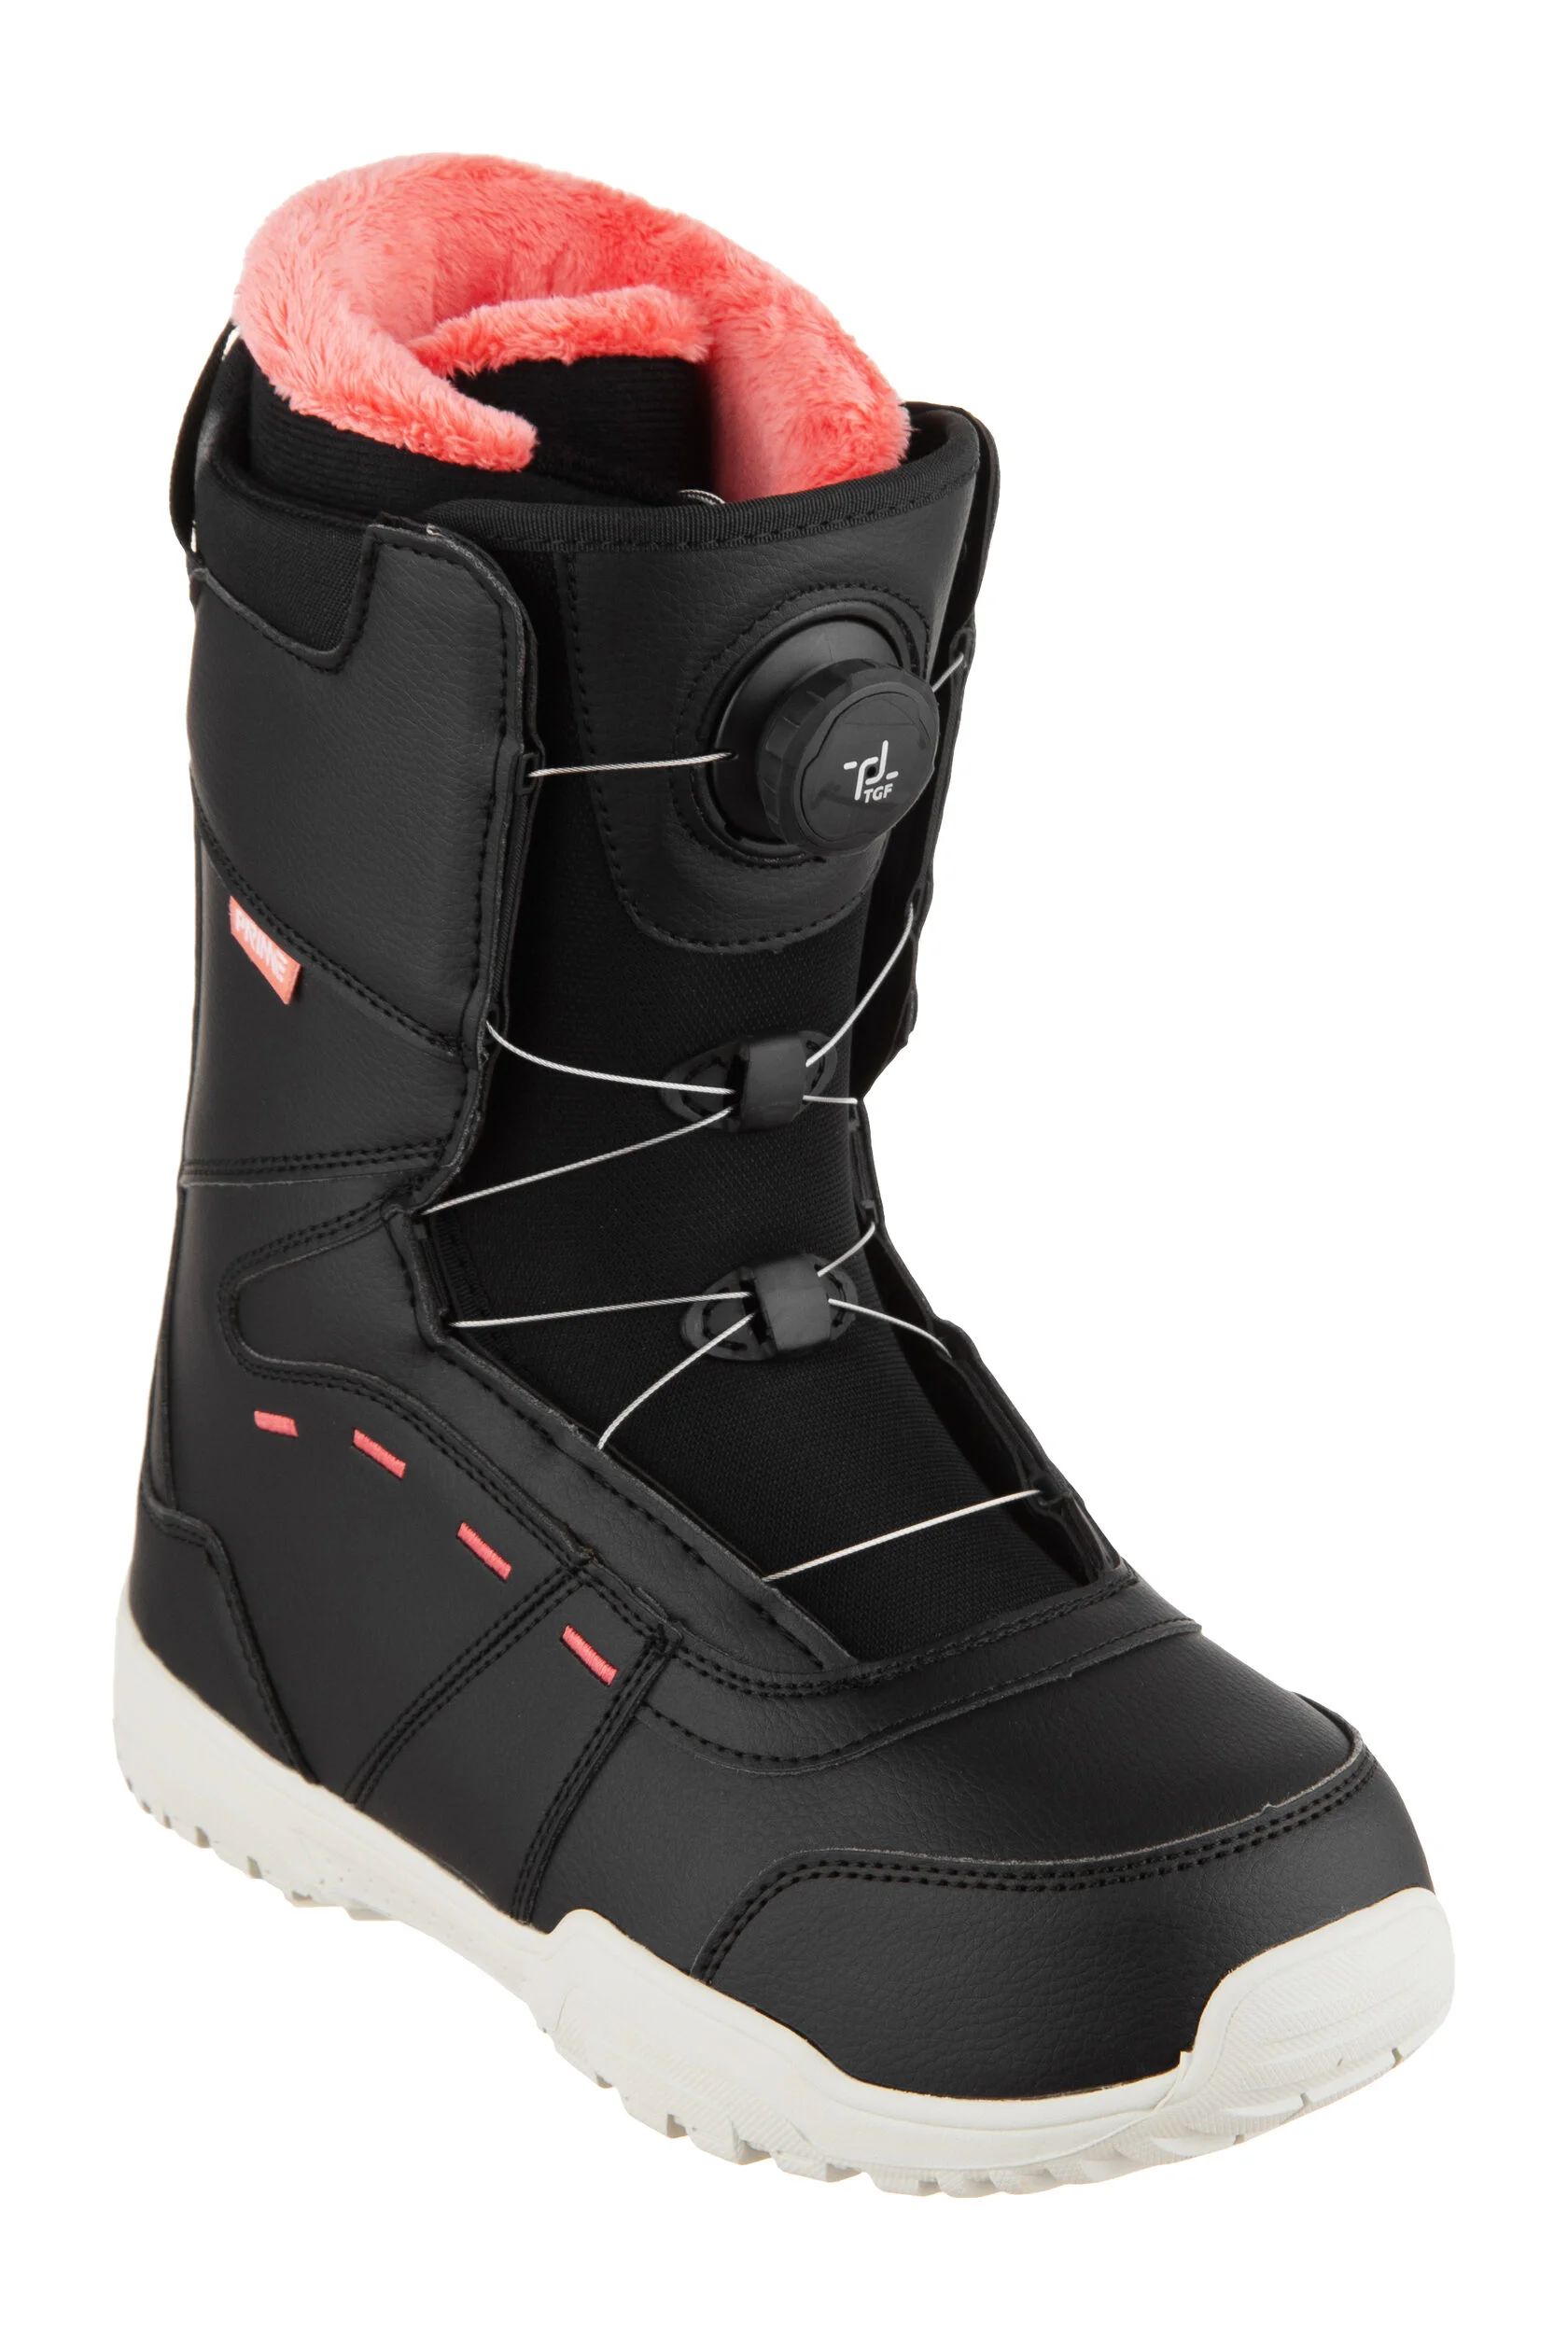 Ботинки для сноуборда Prime COOL-C1 TGF Women 2023 black-red 23,5 см